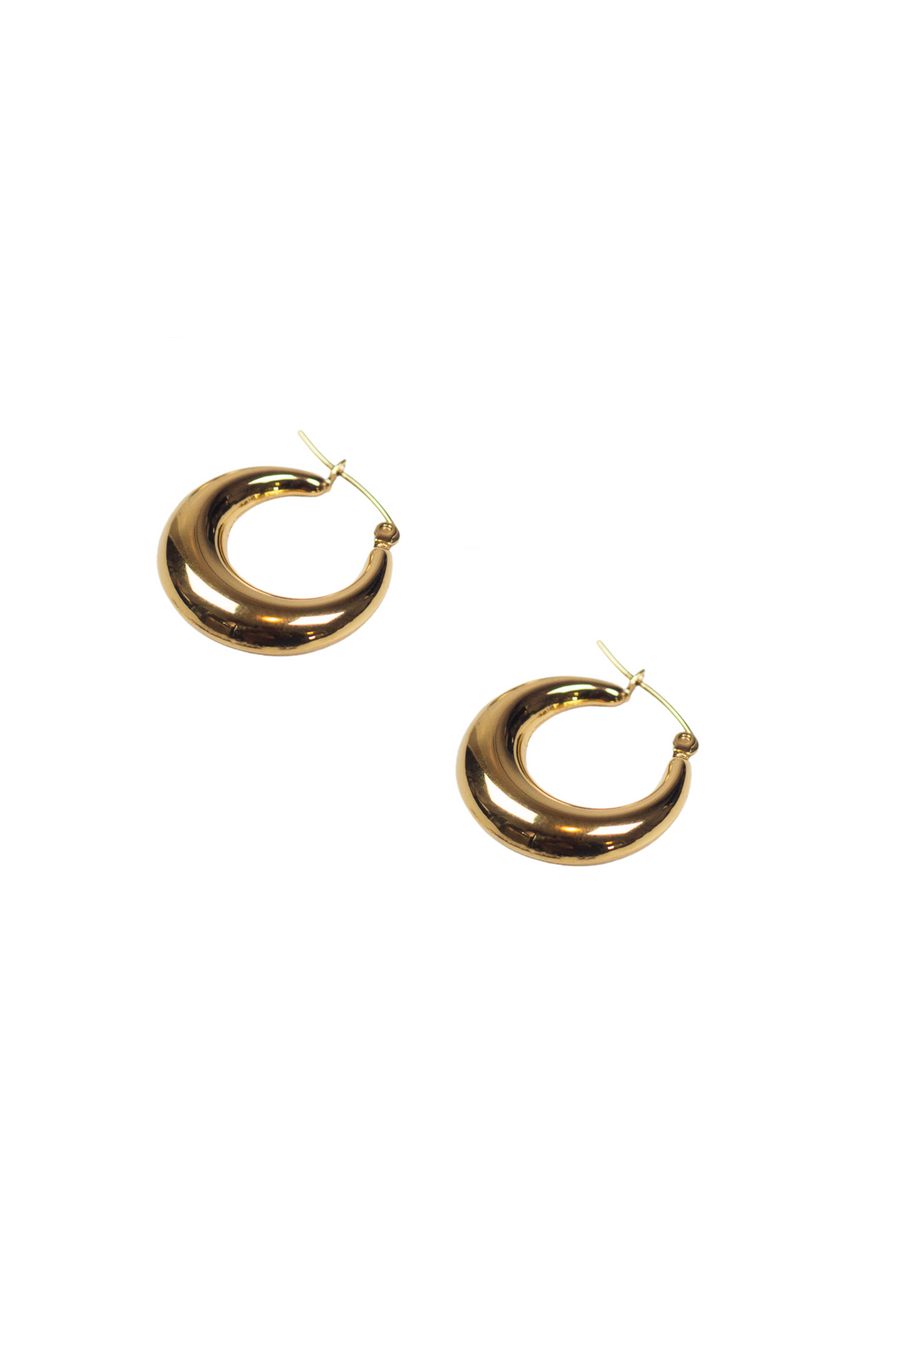 18K gold stainless steel hoop earrings. Named Alyssa Hoops by E's Element.